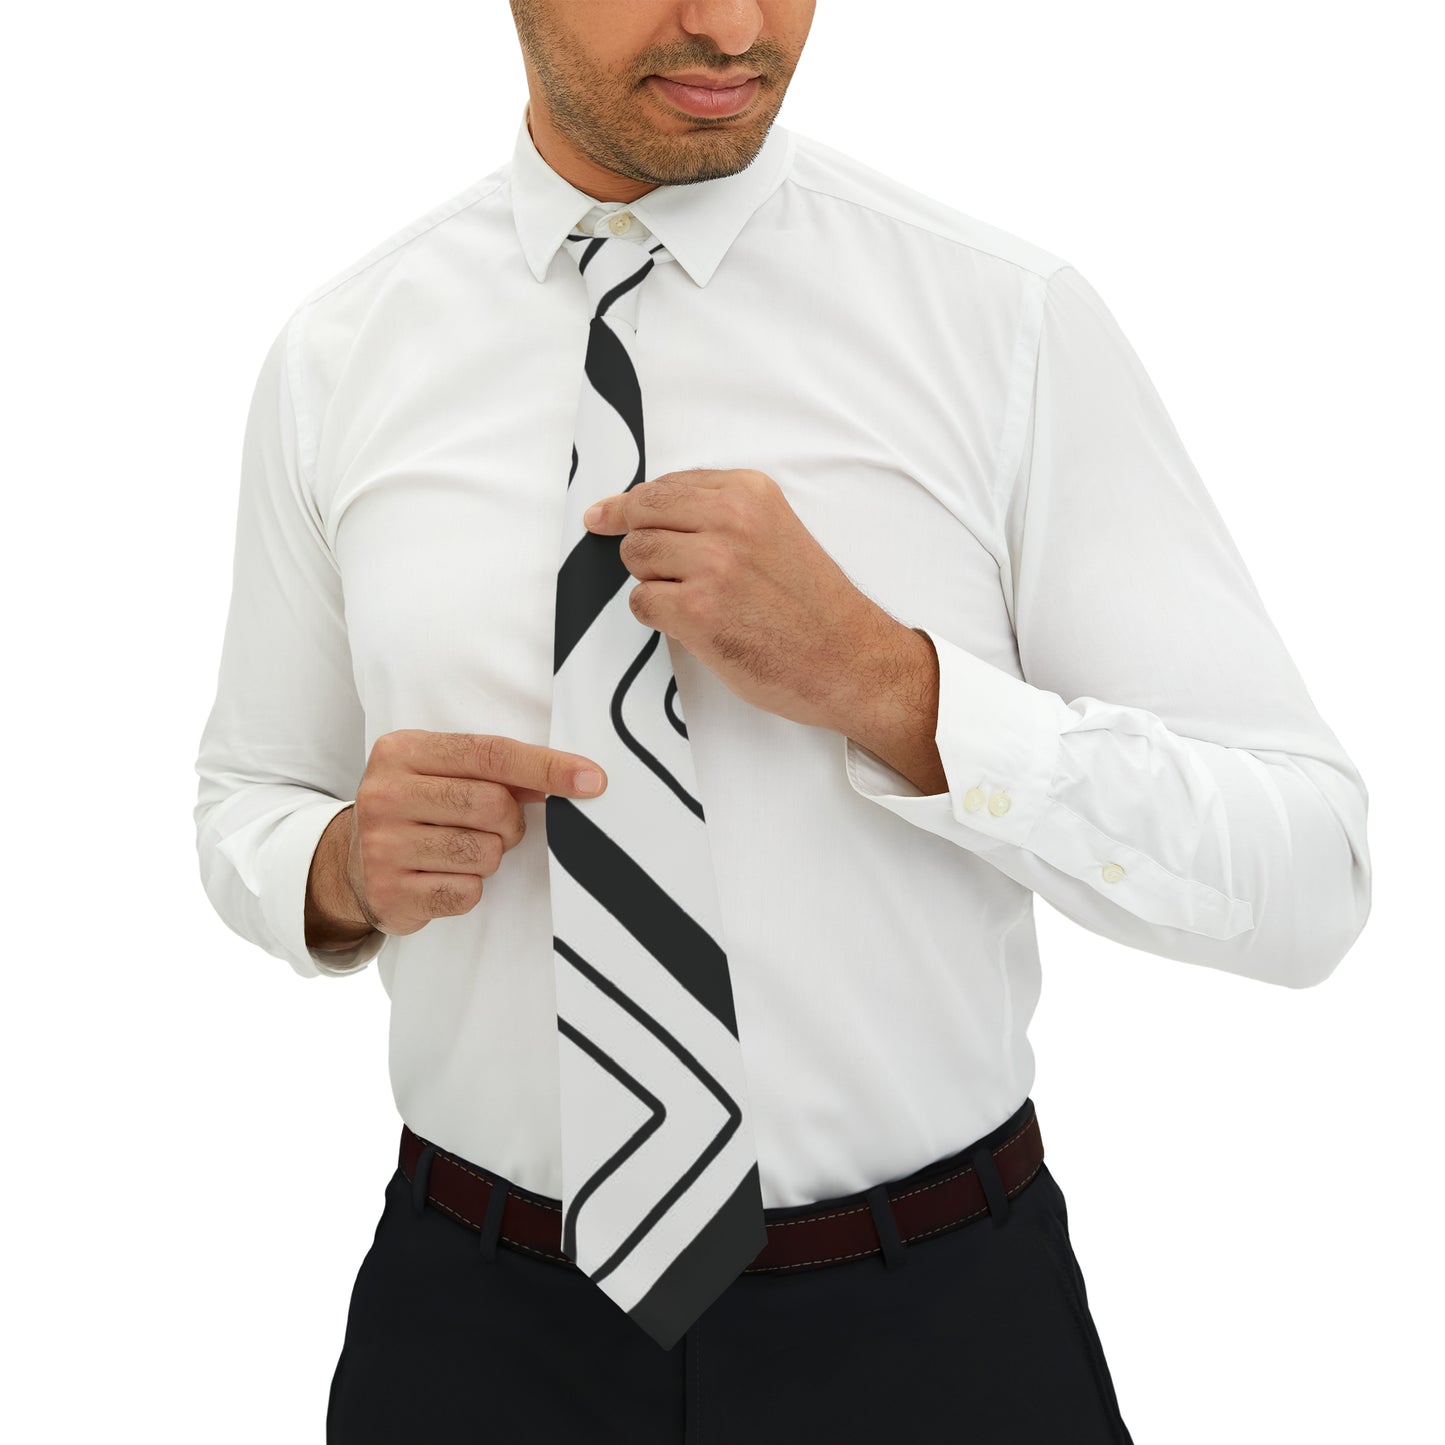 Jazzed Up Necktie